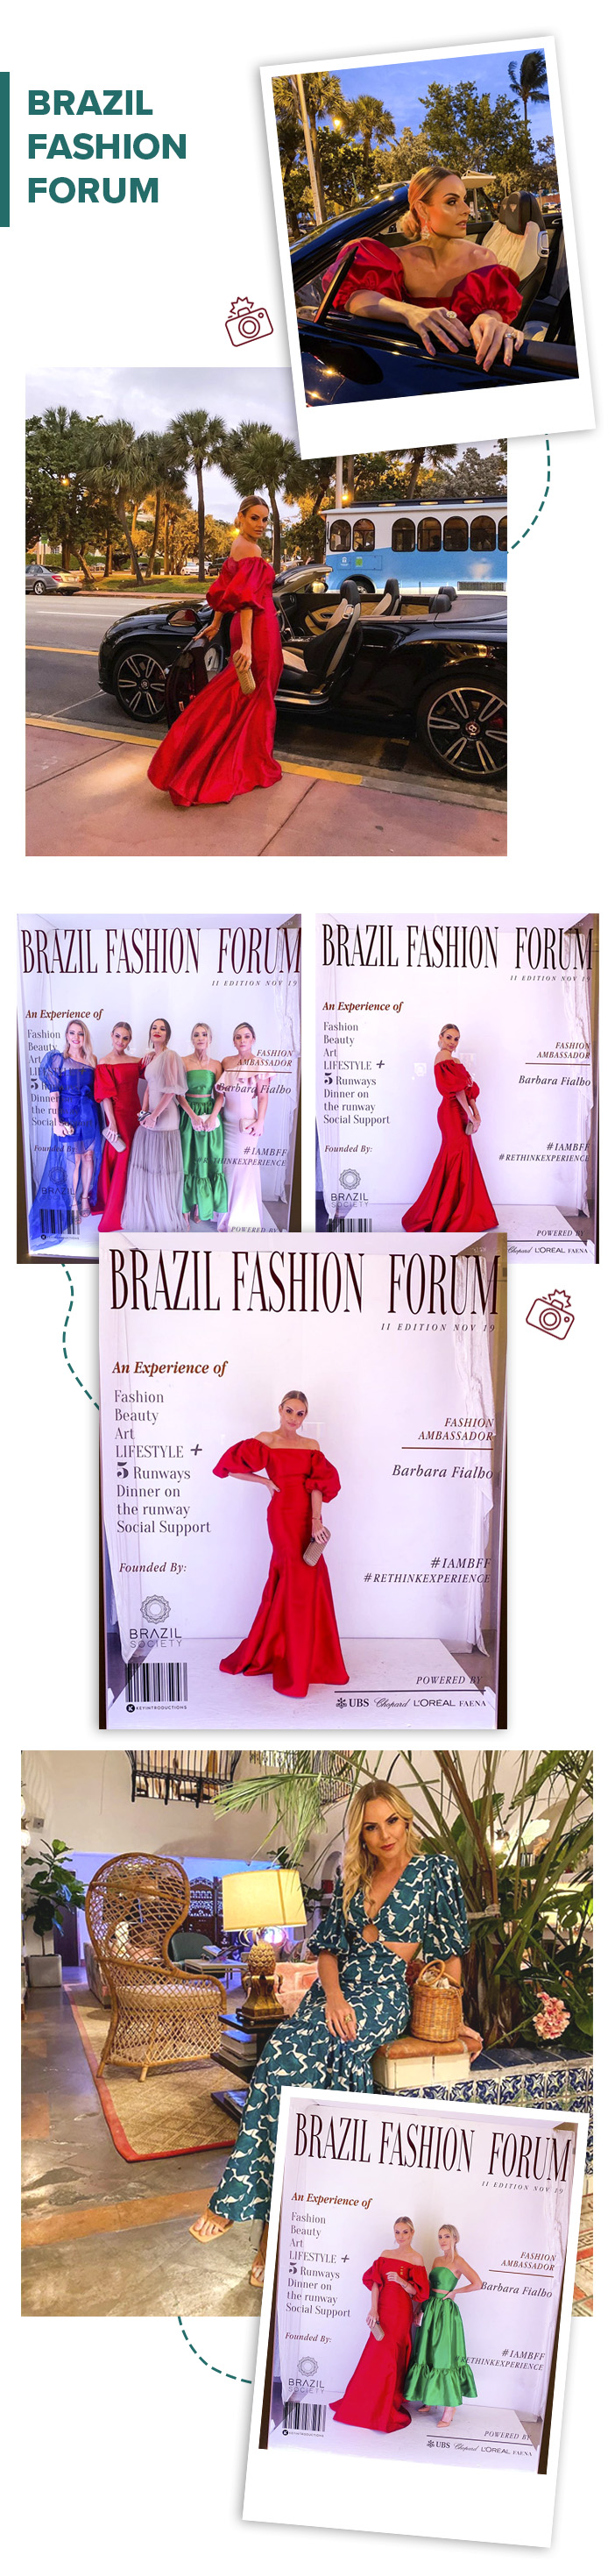 Diário de Bordo - Layla no Brazil Fashion Forum Miami